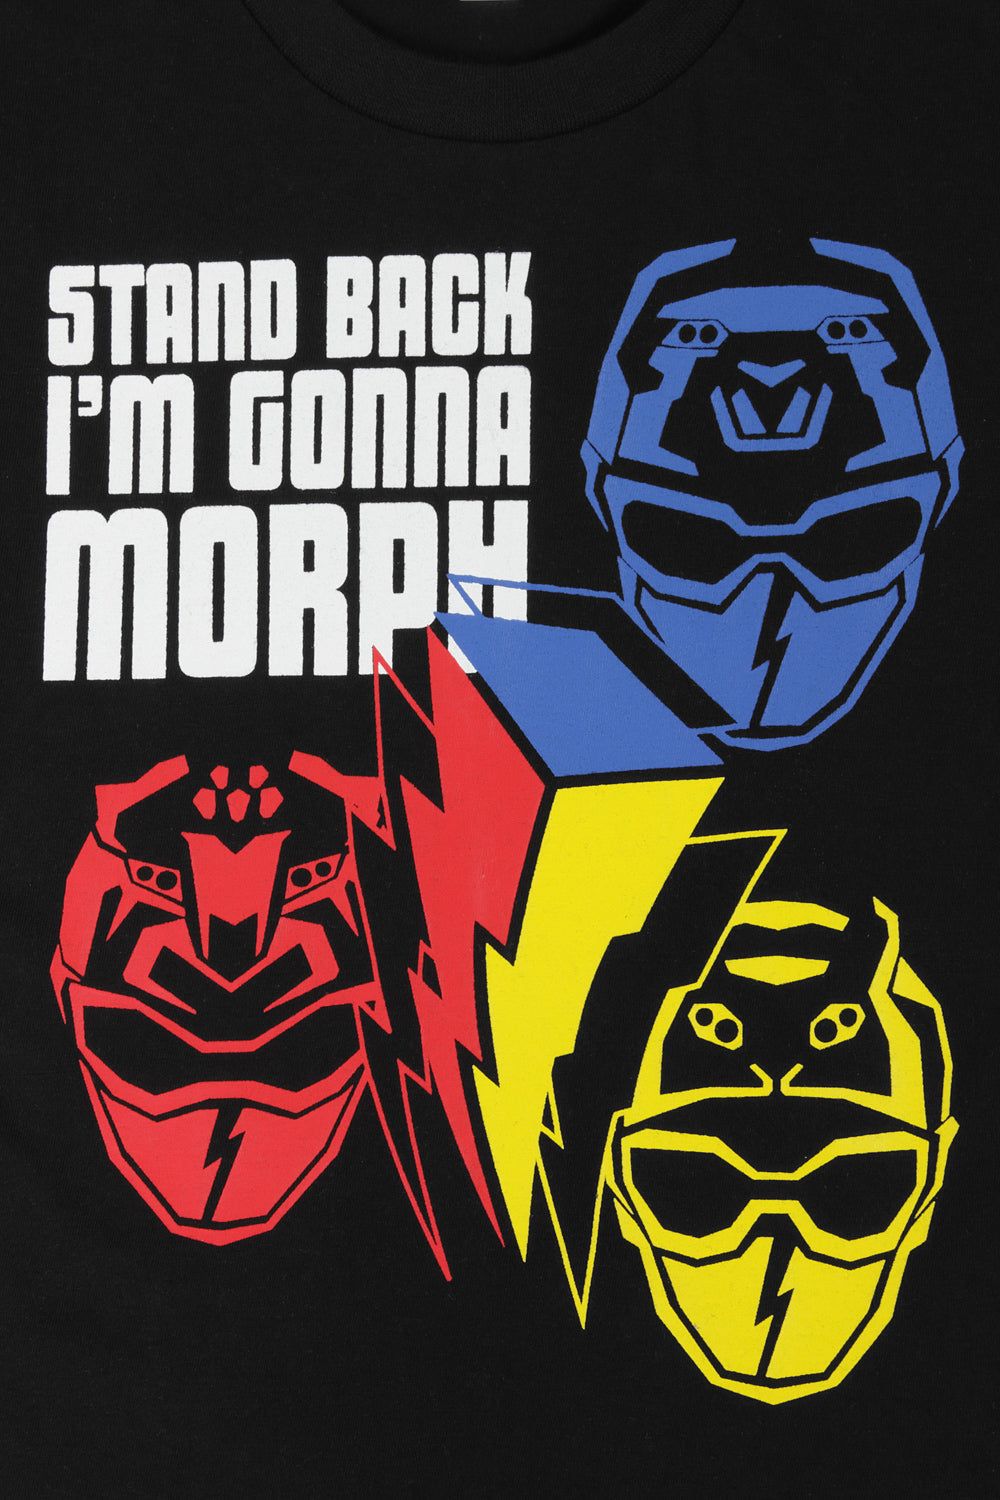 Boys Power Rangers Stand Back I'm Going to Morph Cotton T-Shirt - Pyjamas.com